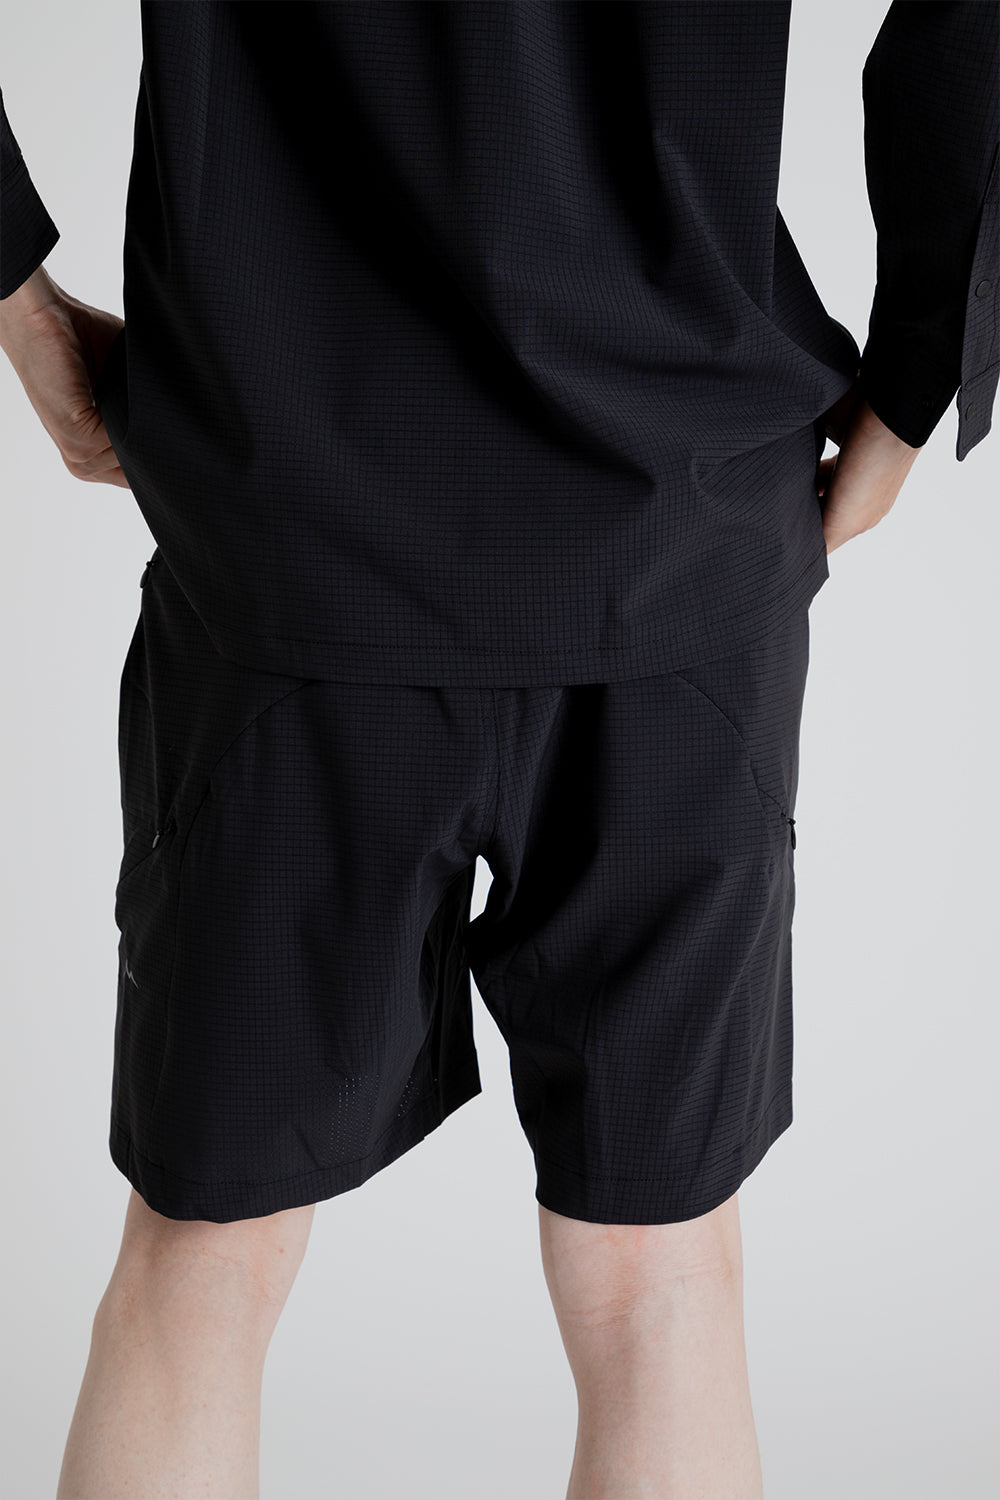 CAYL Flow Shorts in Black